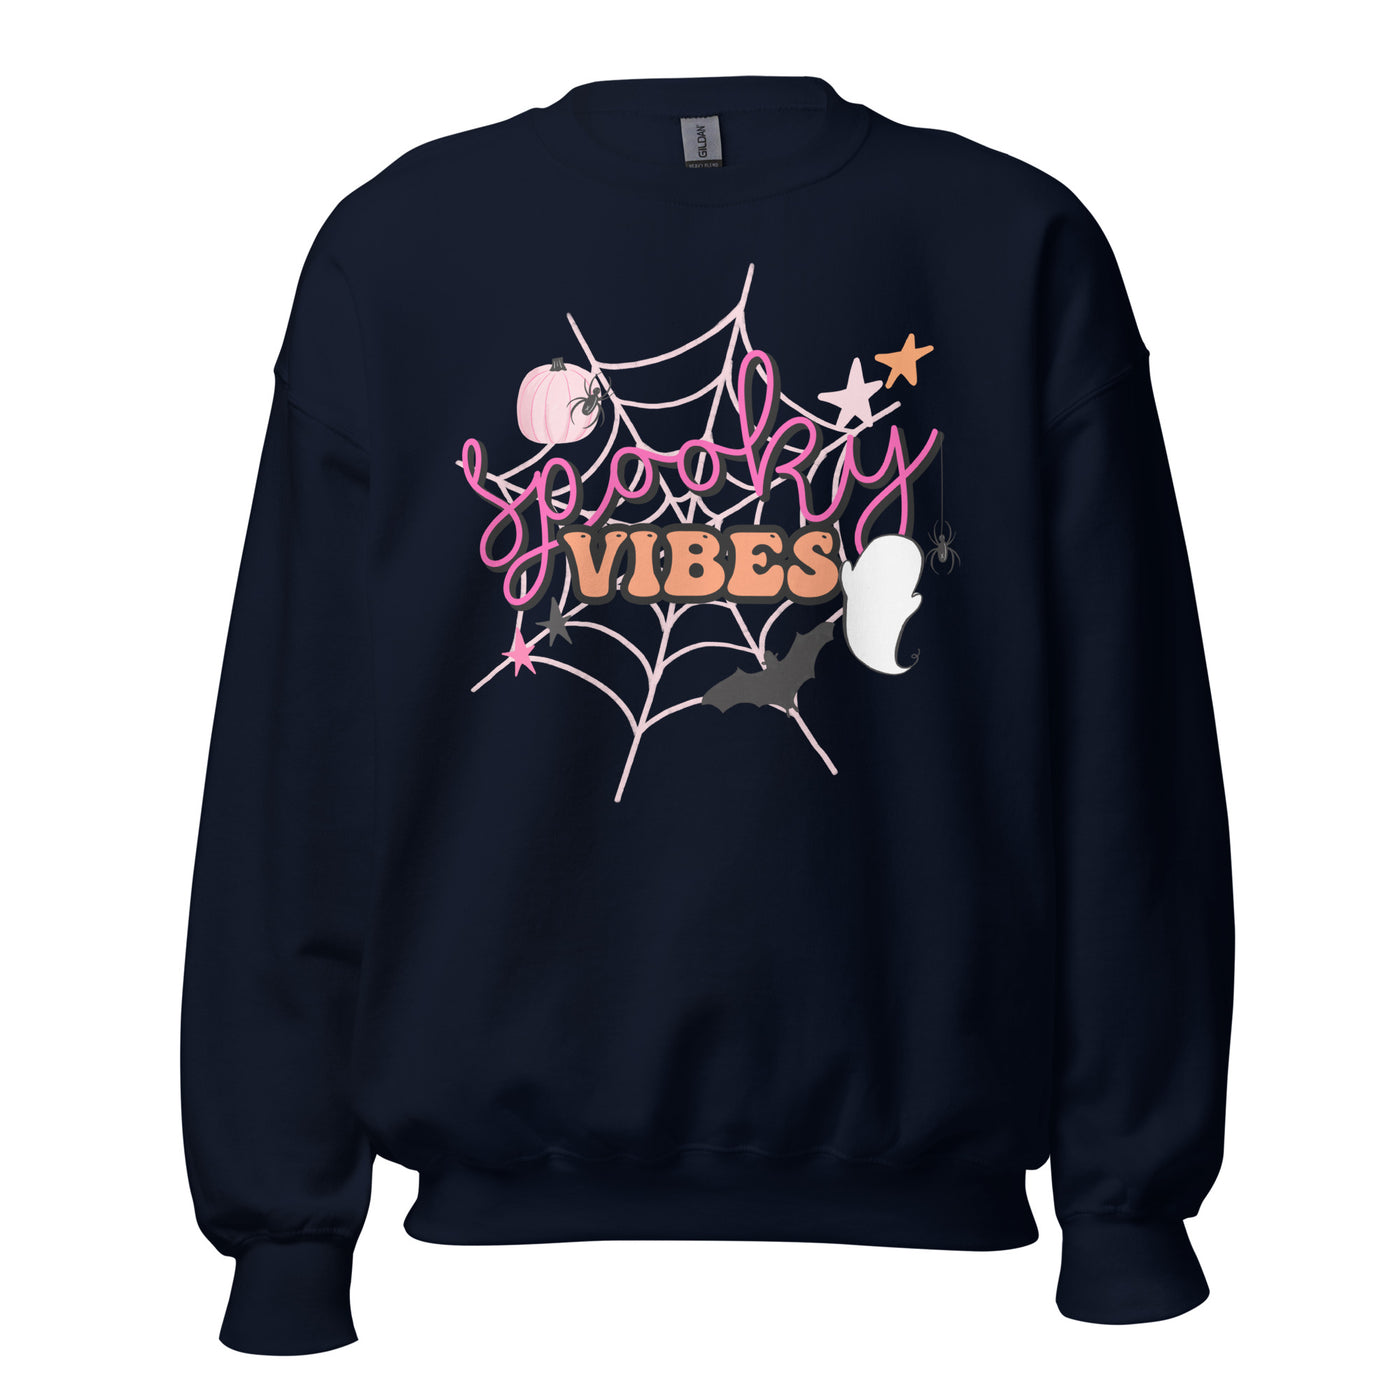 Monogrammed 'Spooky Vibes' Crewneck Sweatshirt